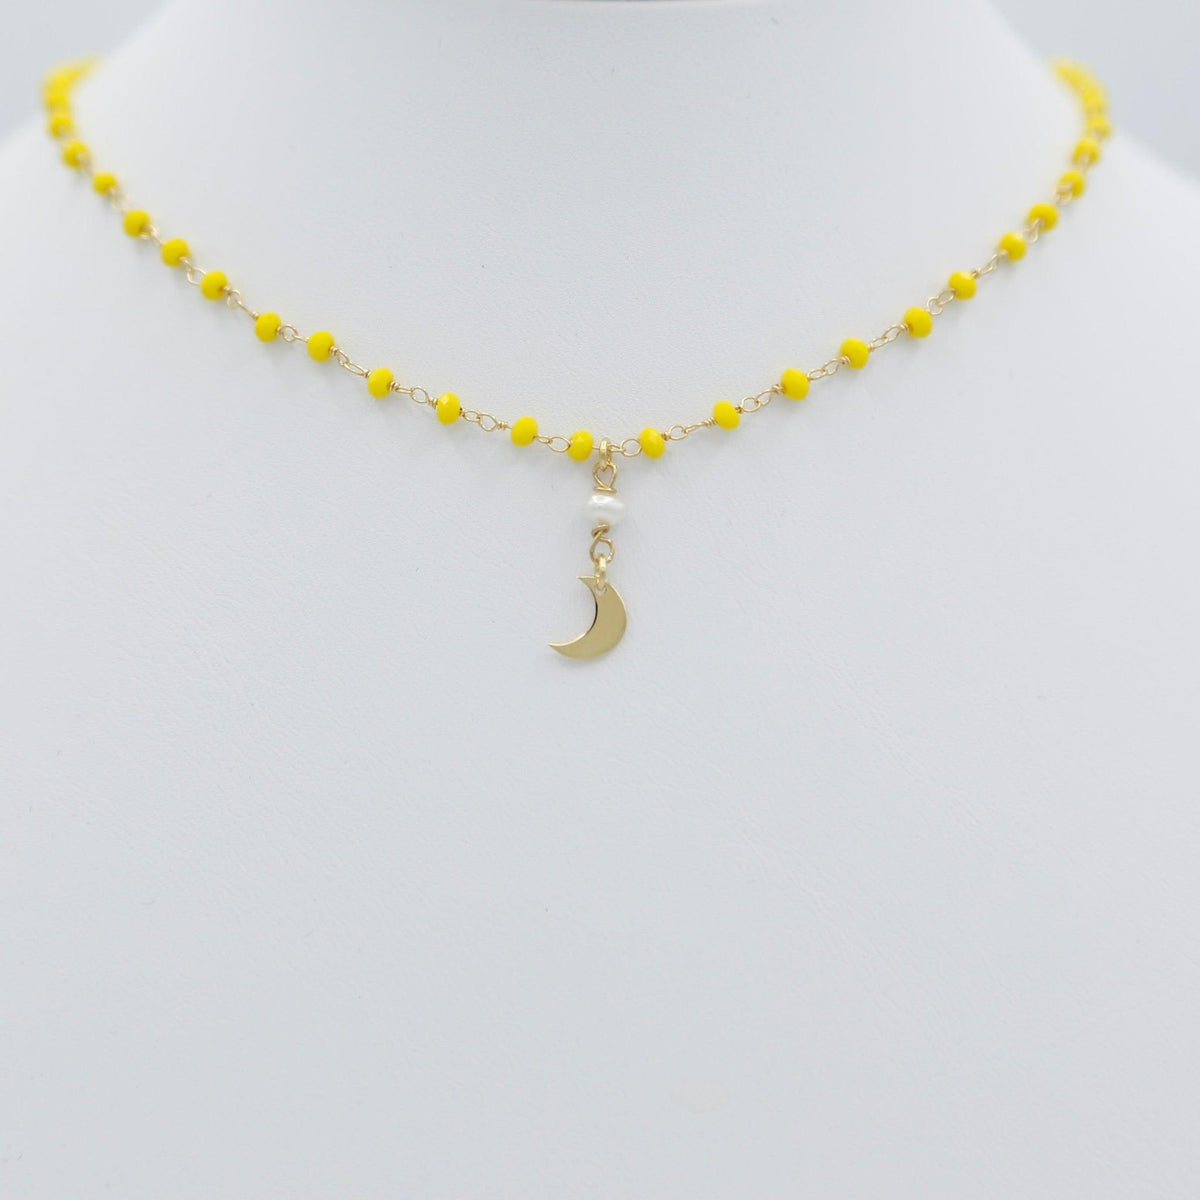 Yellow Beads Choker Necklace with Half Moon Pendant - Vita Isola